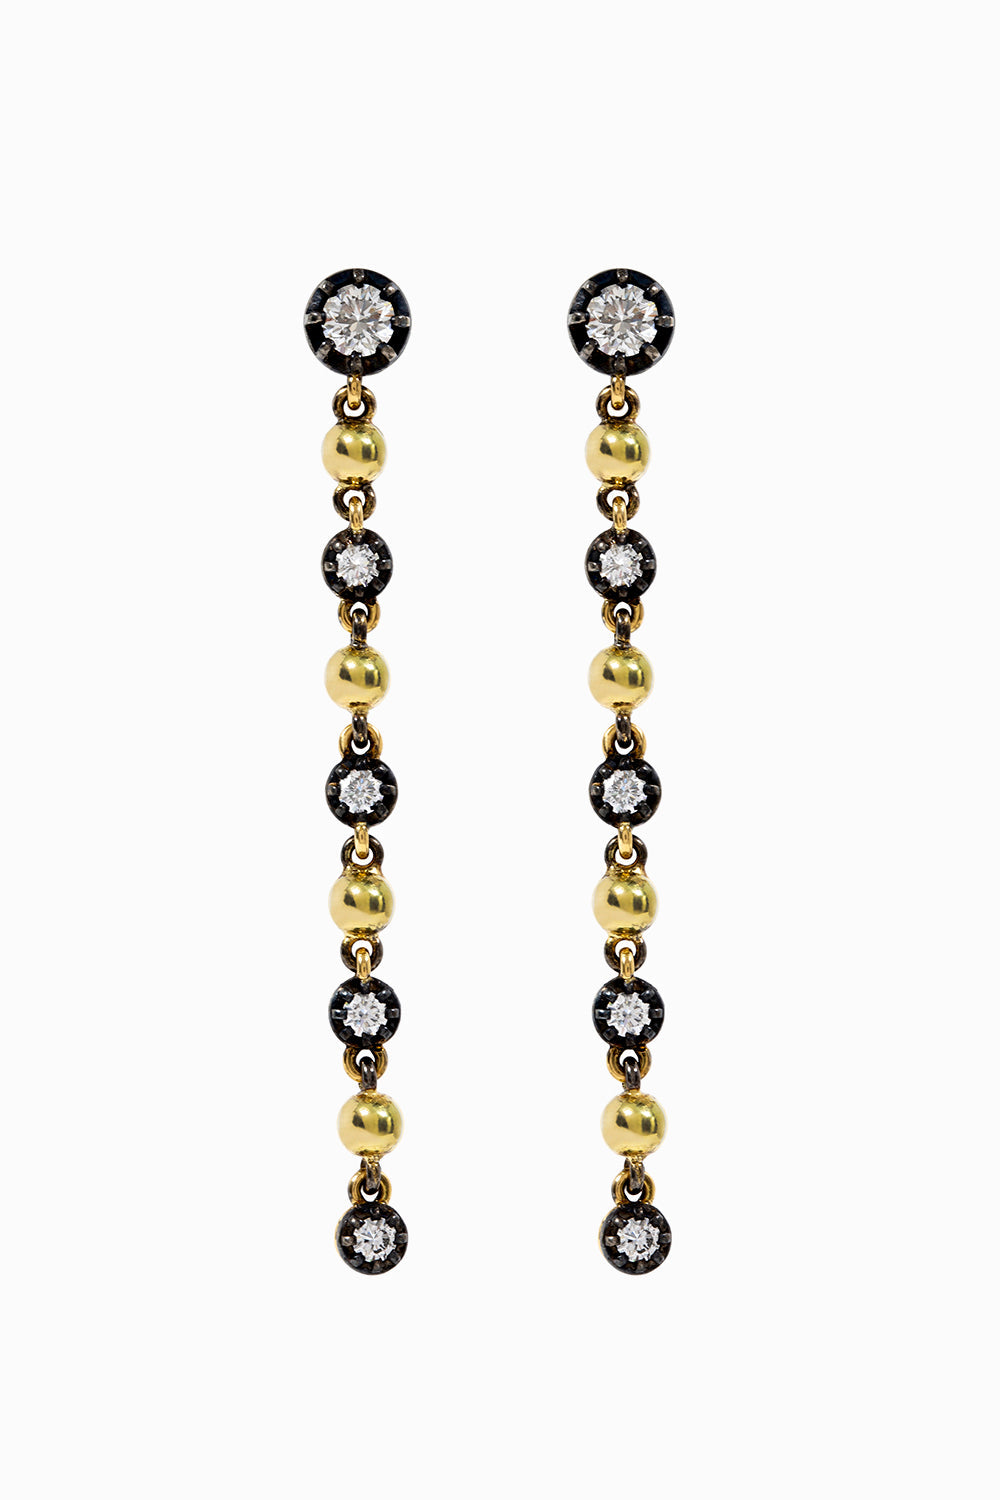 Long earrings with 1.26 ct. diamonds.